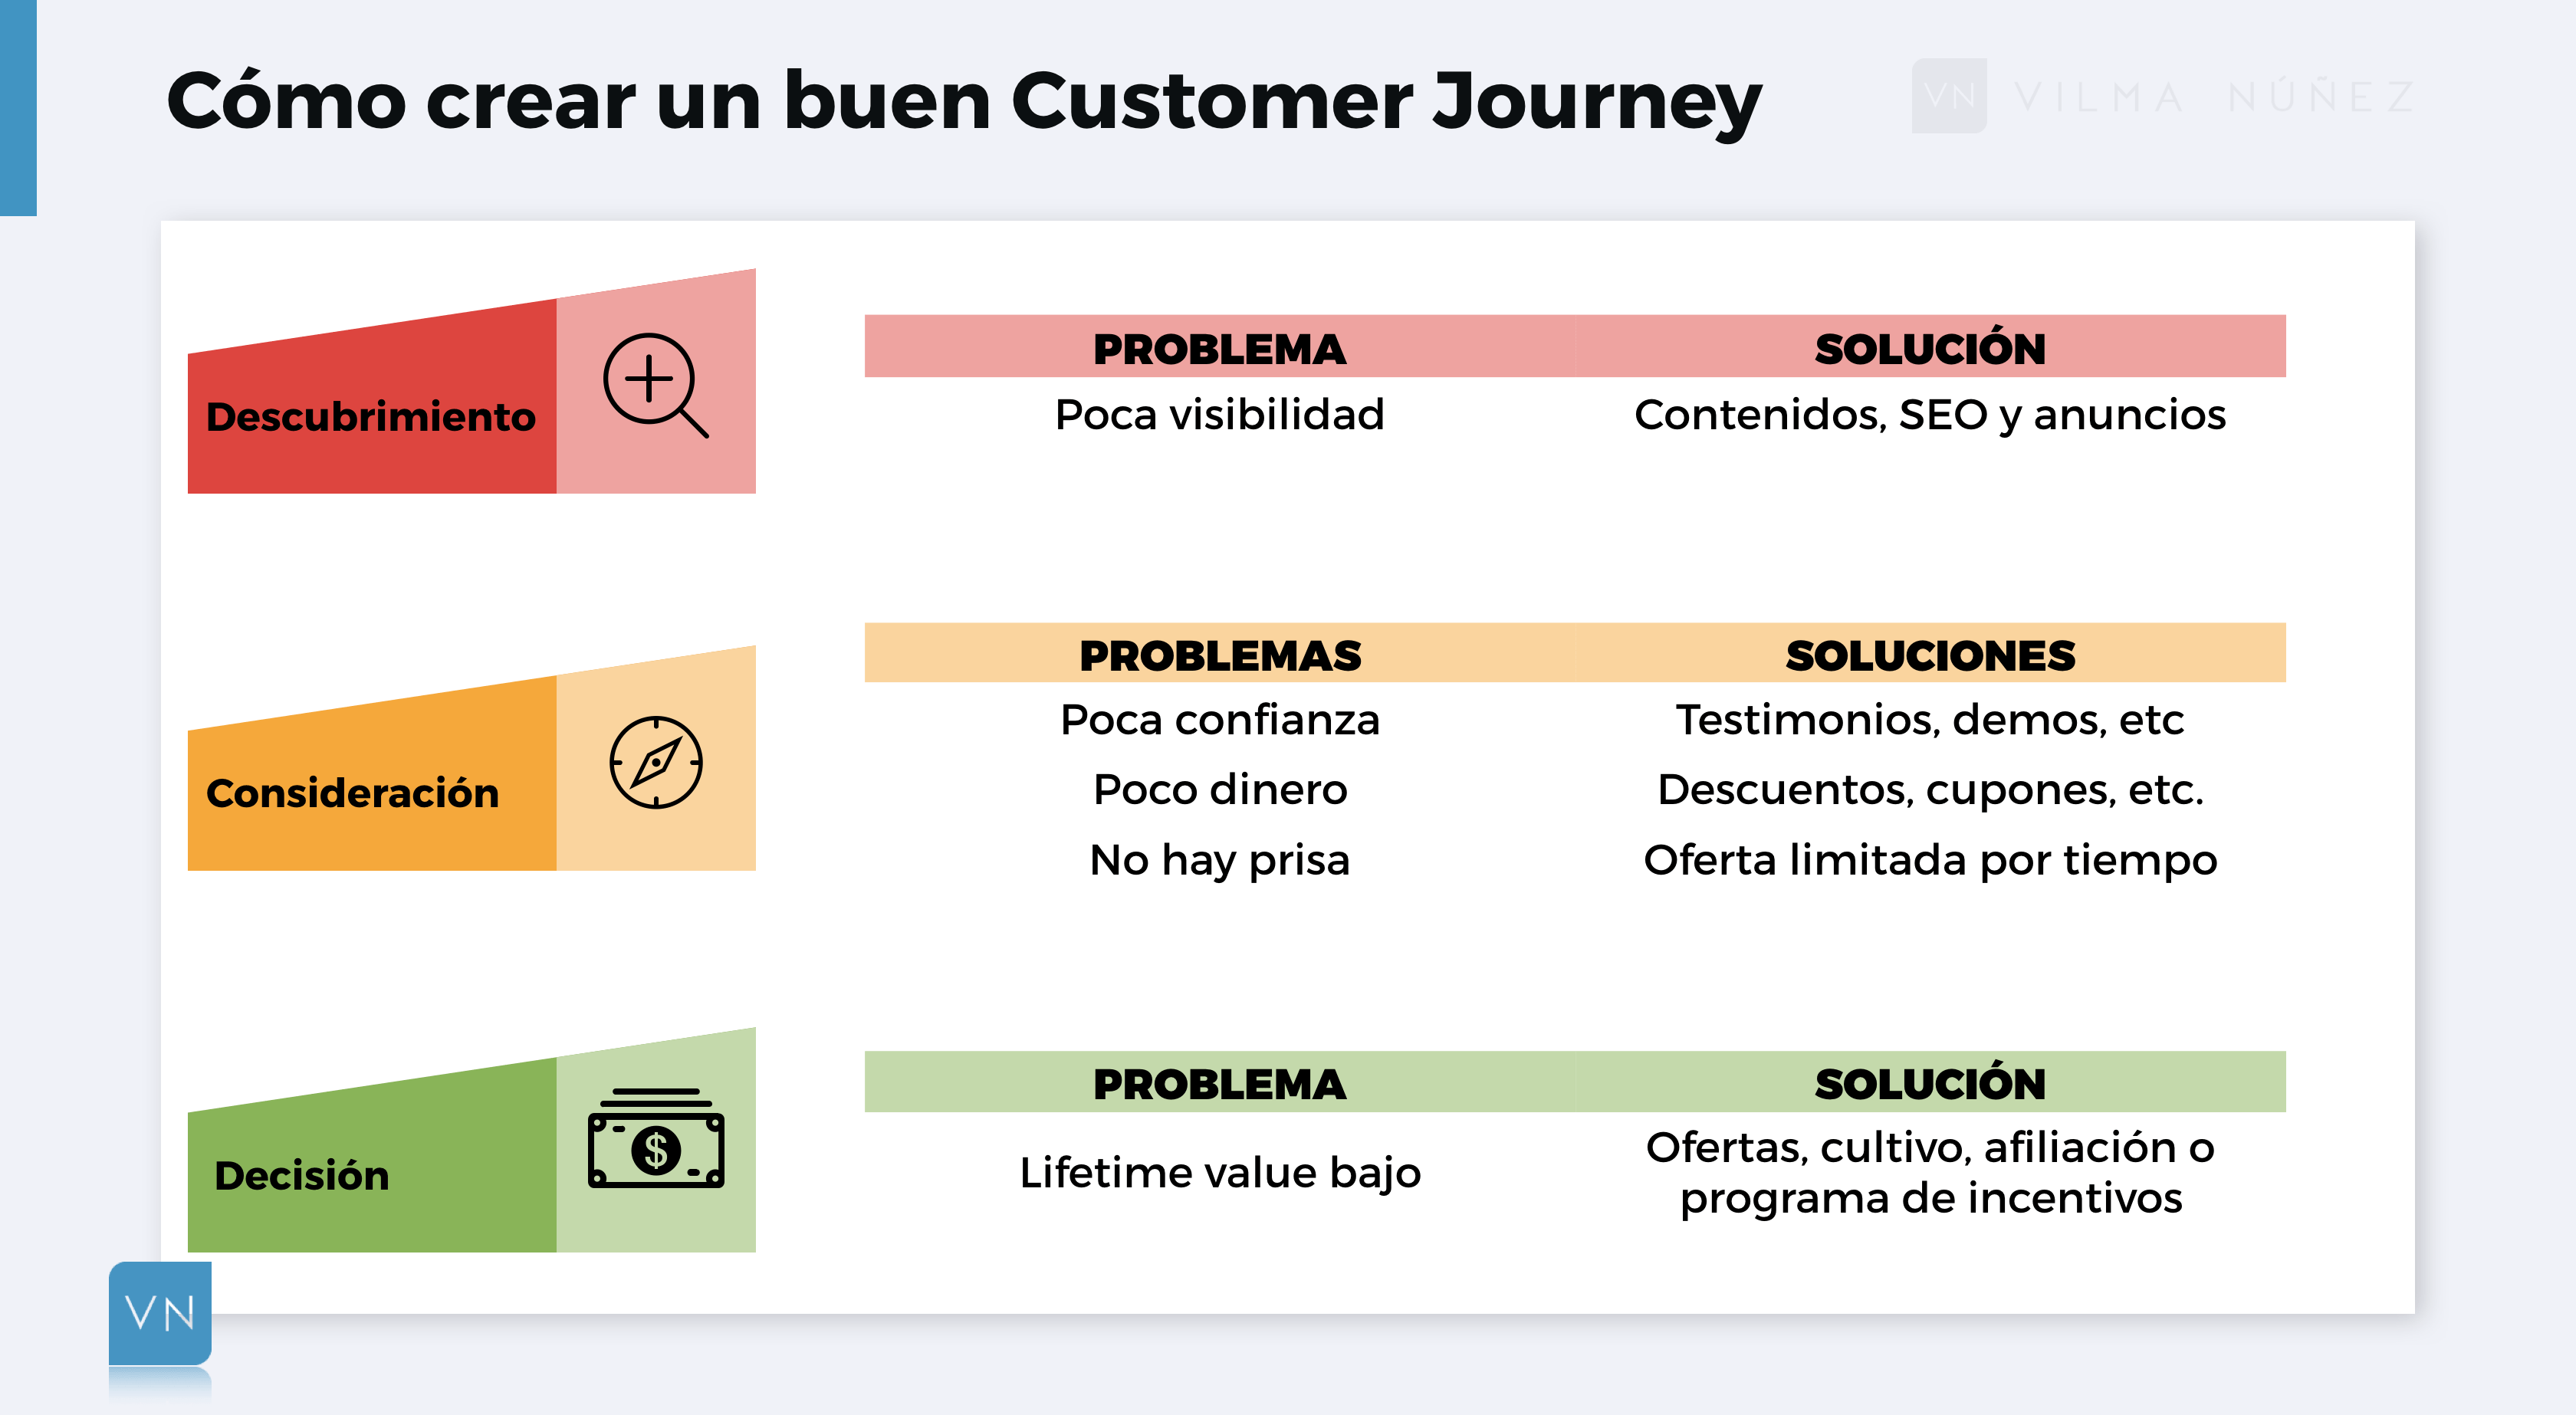 journey que significa en espanol